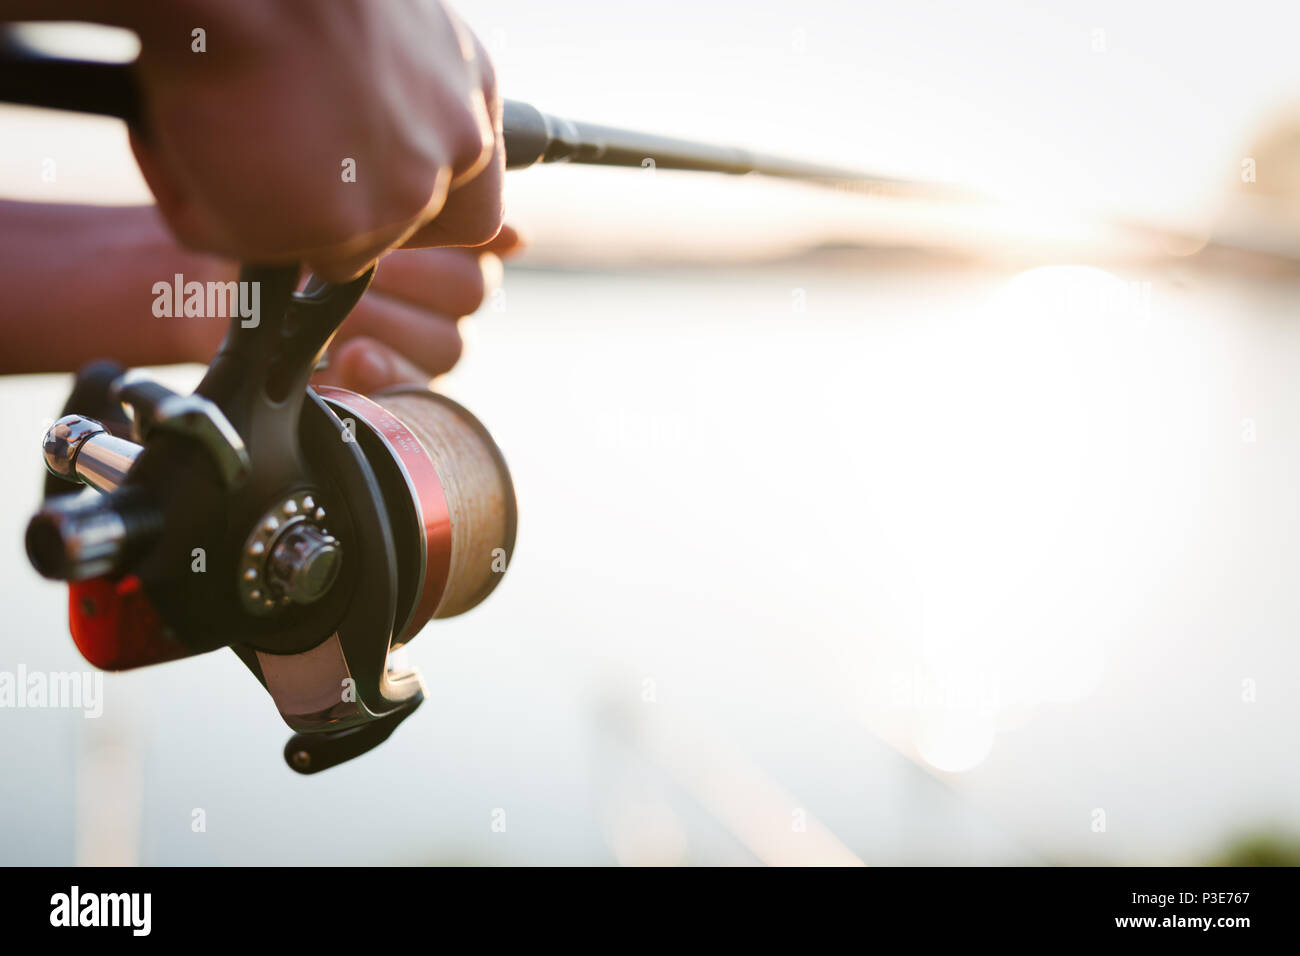 https://c8.alamy.com/comp/P3E767/fishing-gear-fishing-spinning-fishing-line-and-sports-equipment-P3E767.jpg